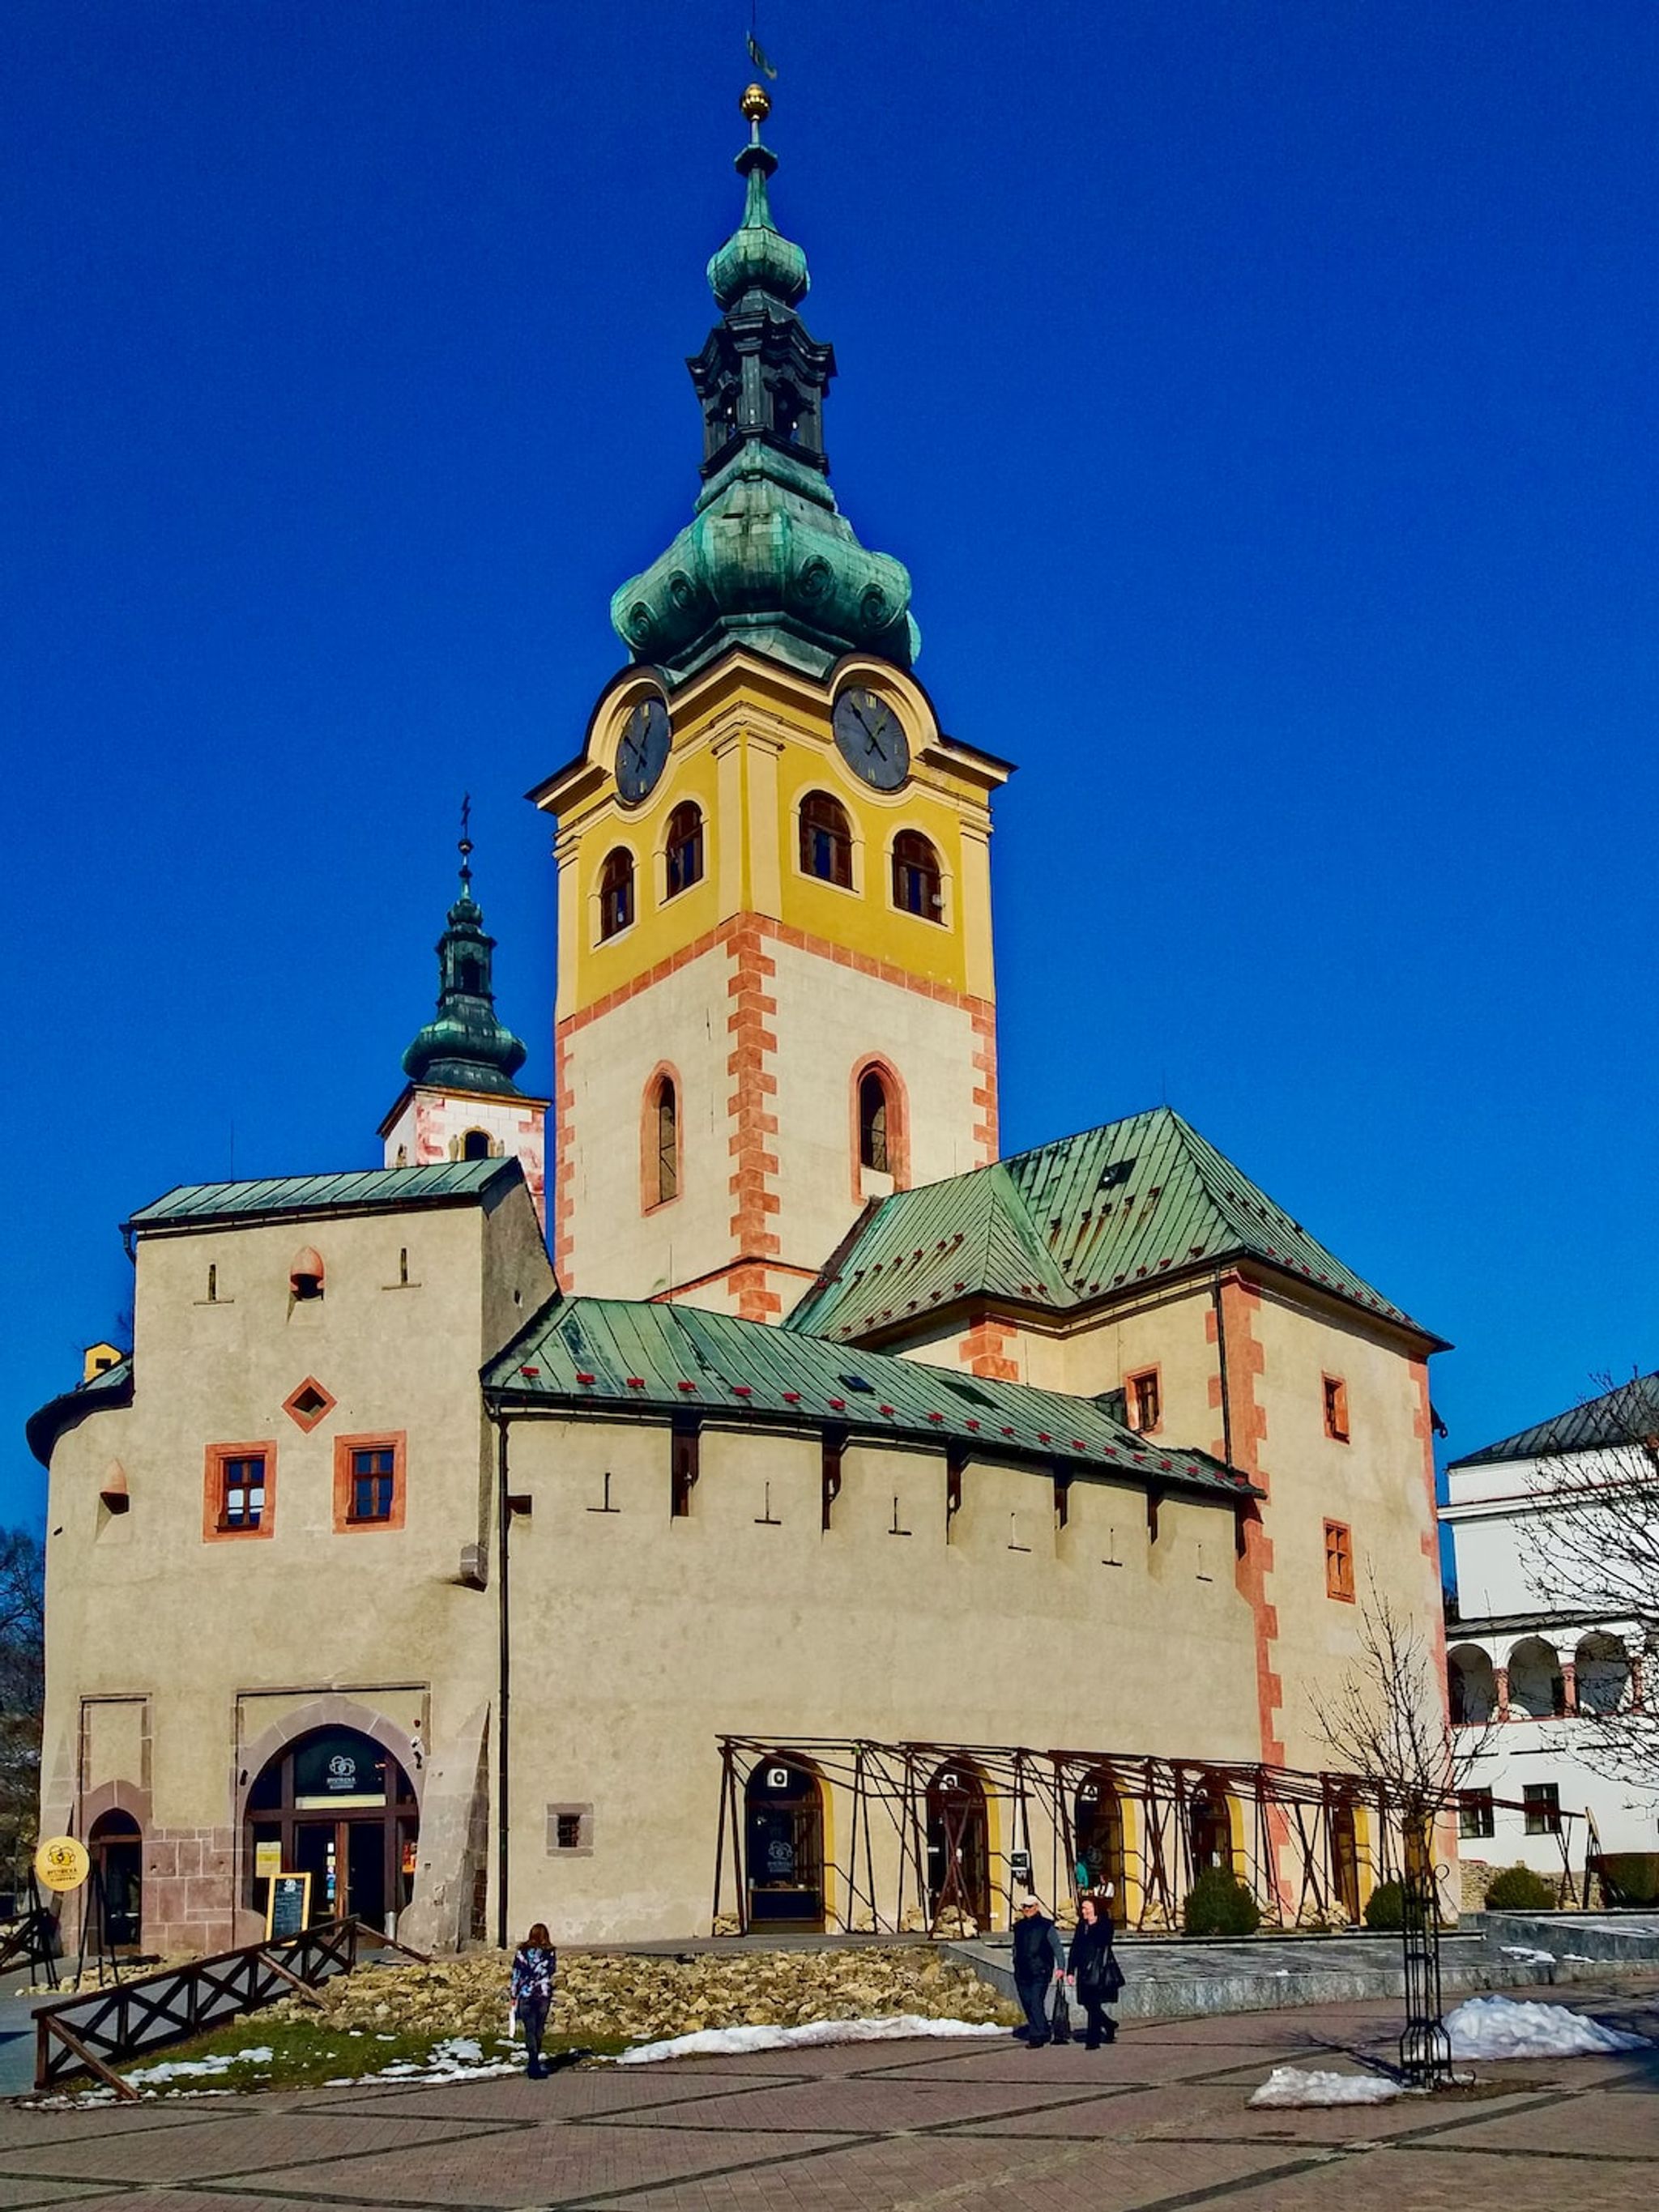 Die Besten Hotels in Banská Bystrica